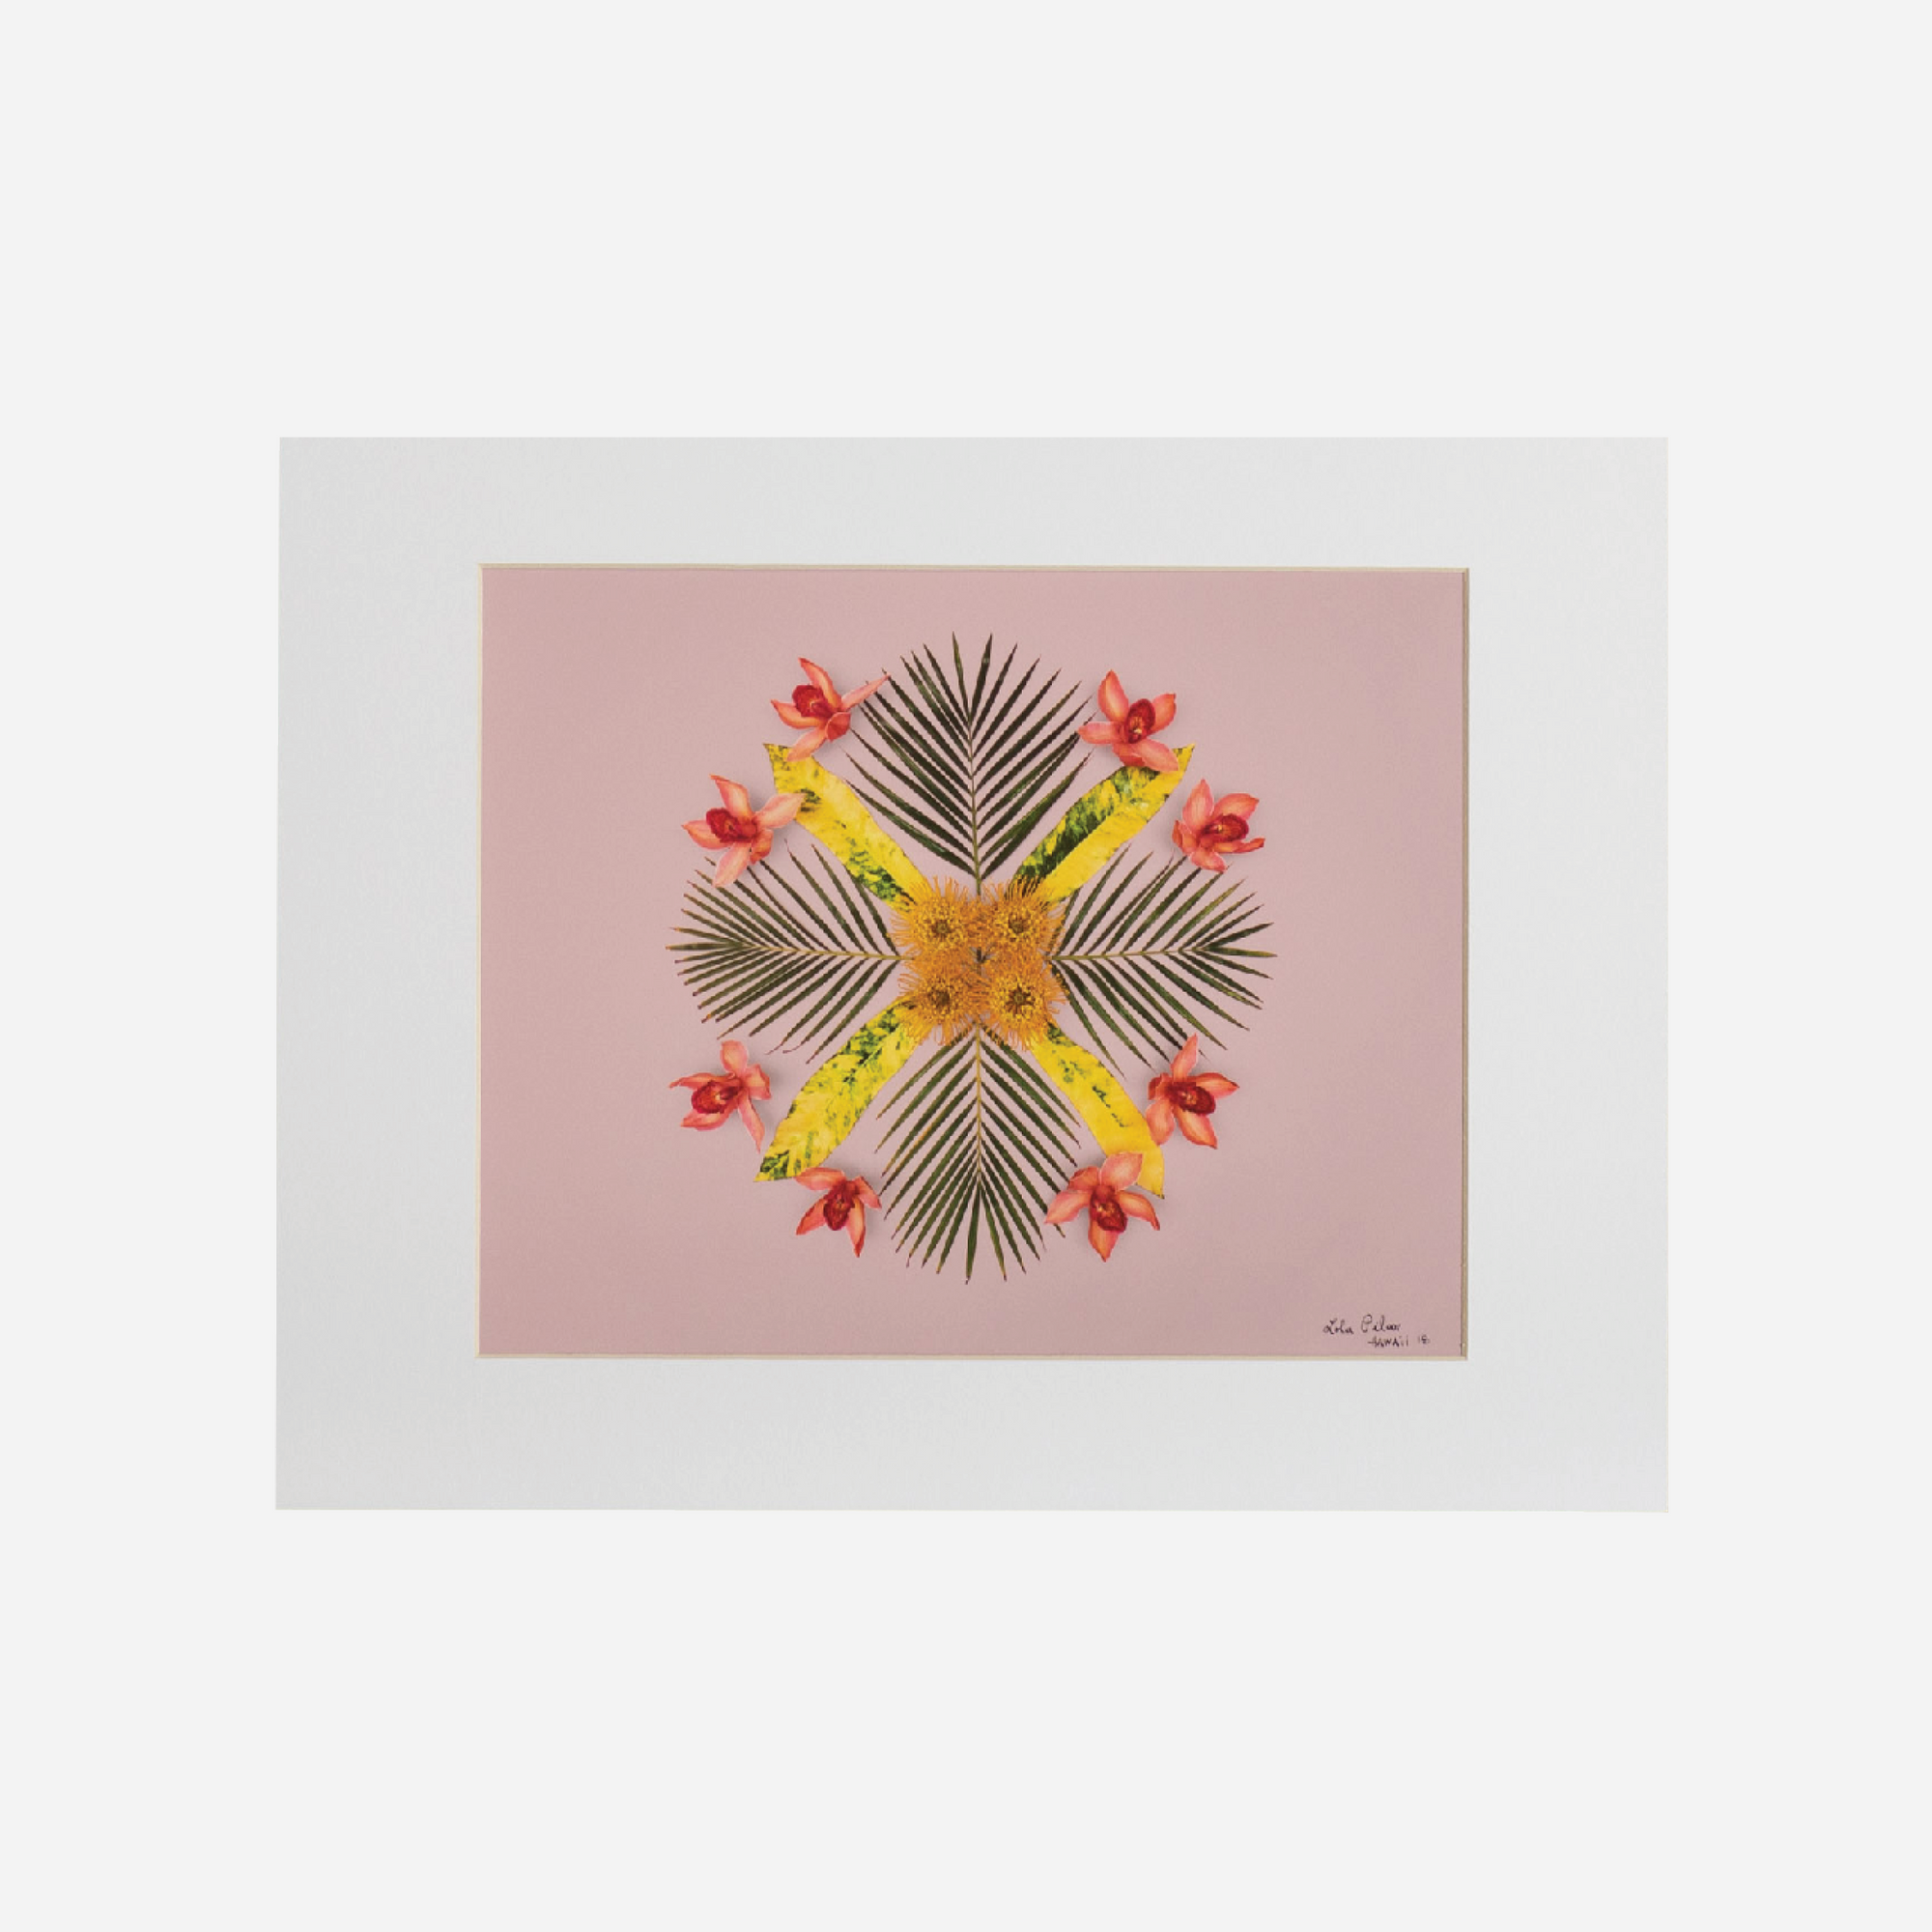 Lola Pilar - Small Photo Prints (8x10) "The Pink Palace"